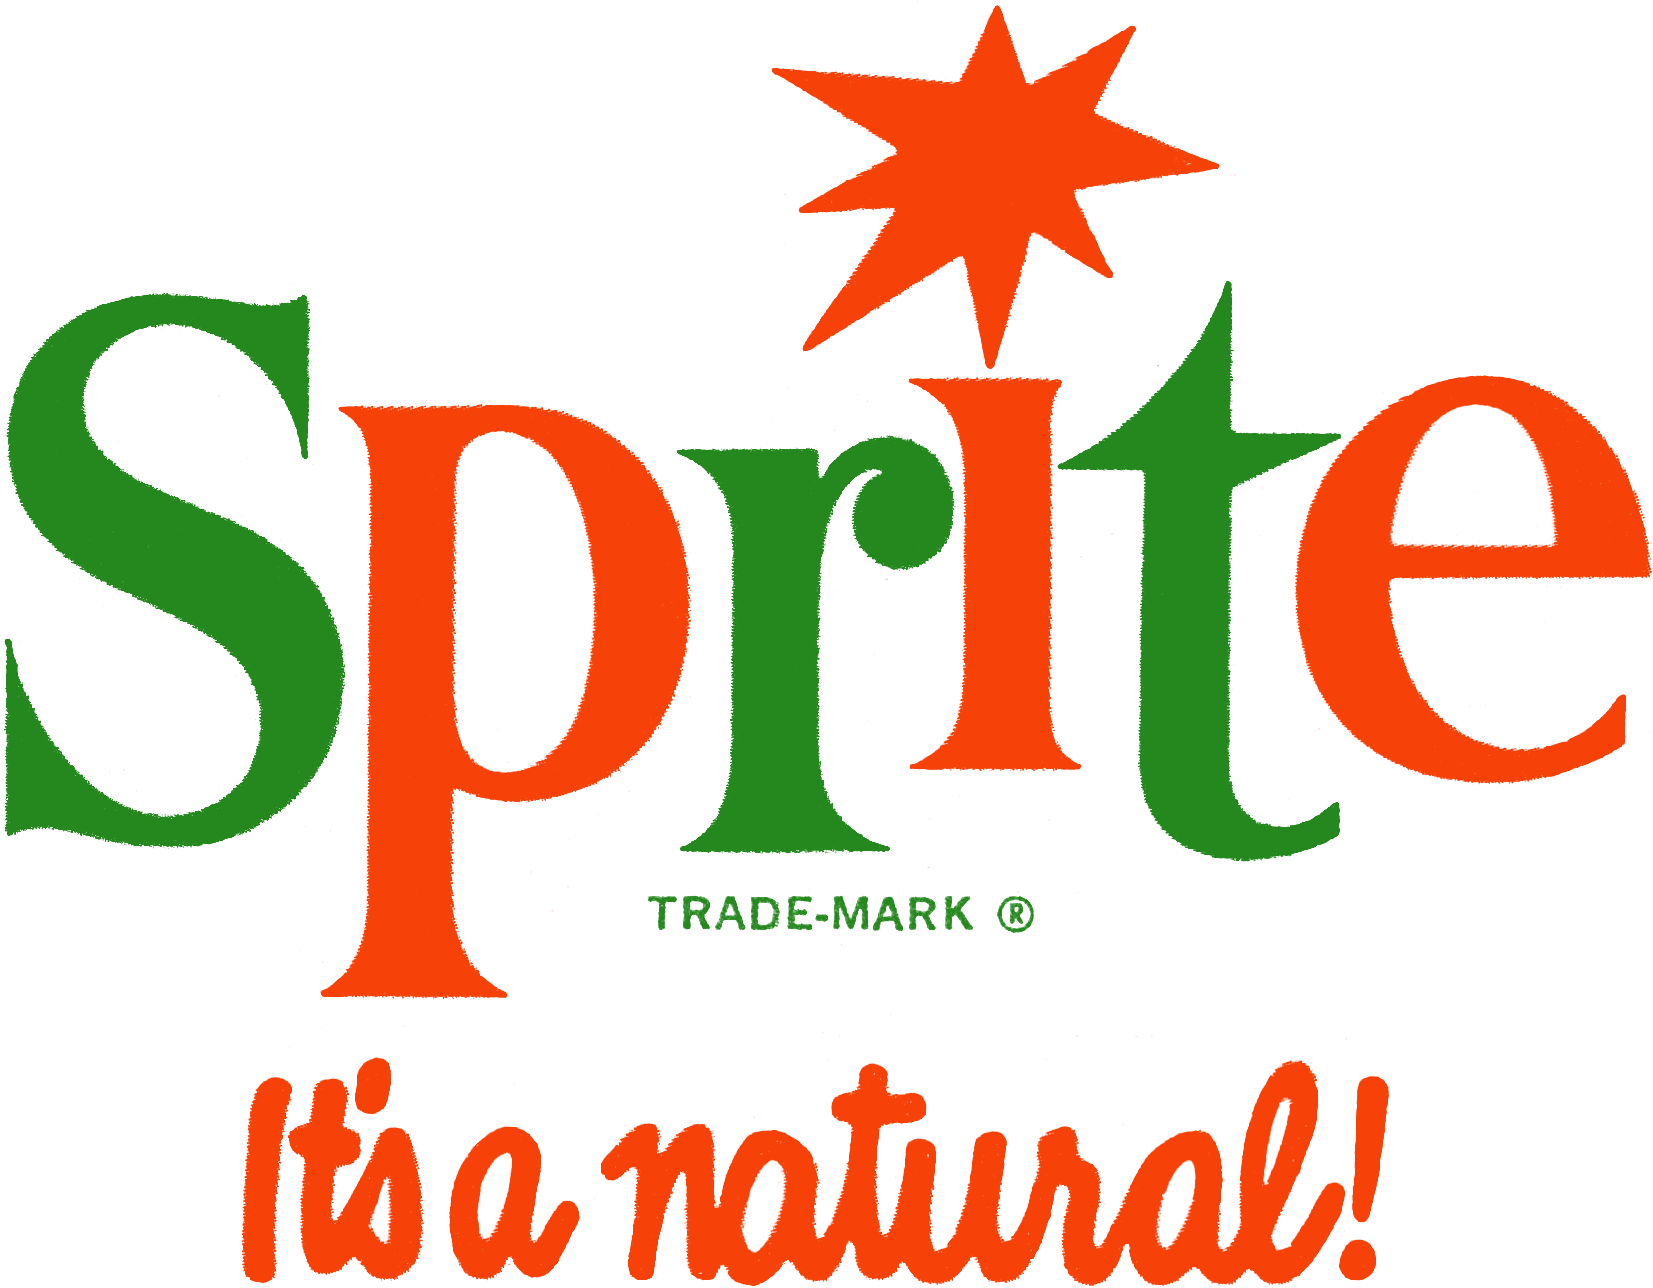 Sprite Logo - Sprite | Logopedia | FANDOM powered by Wikia